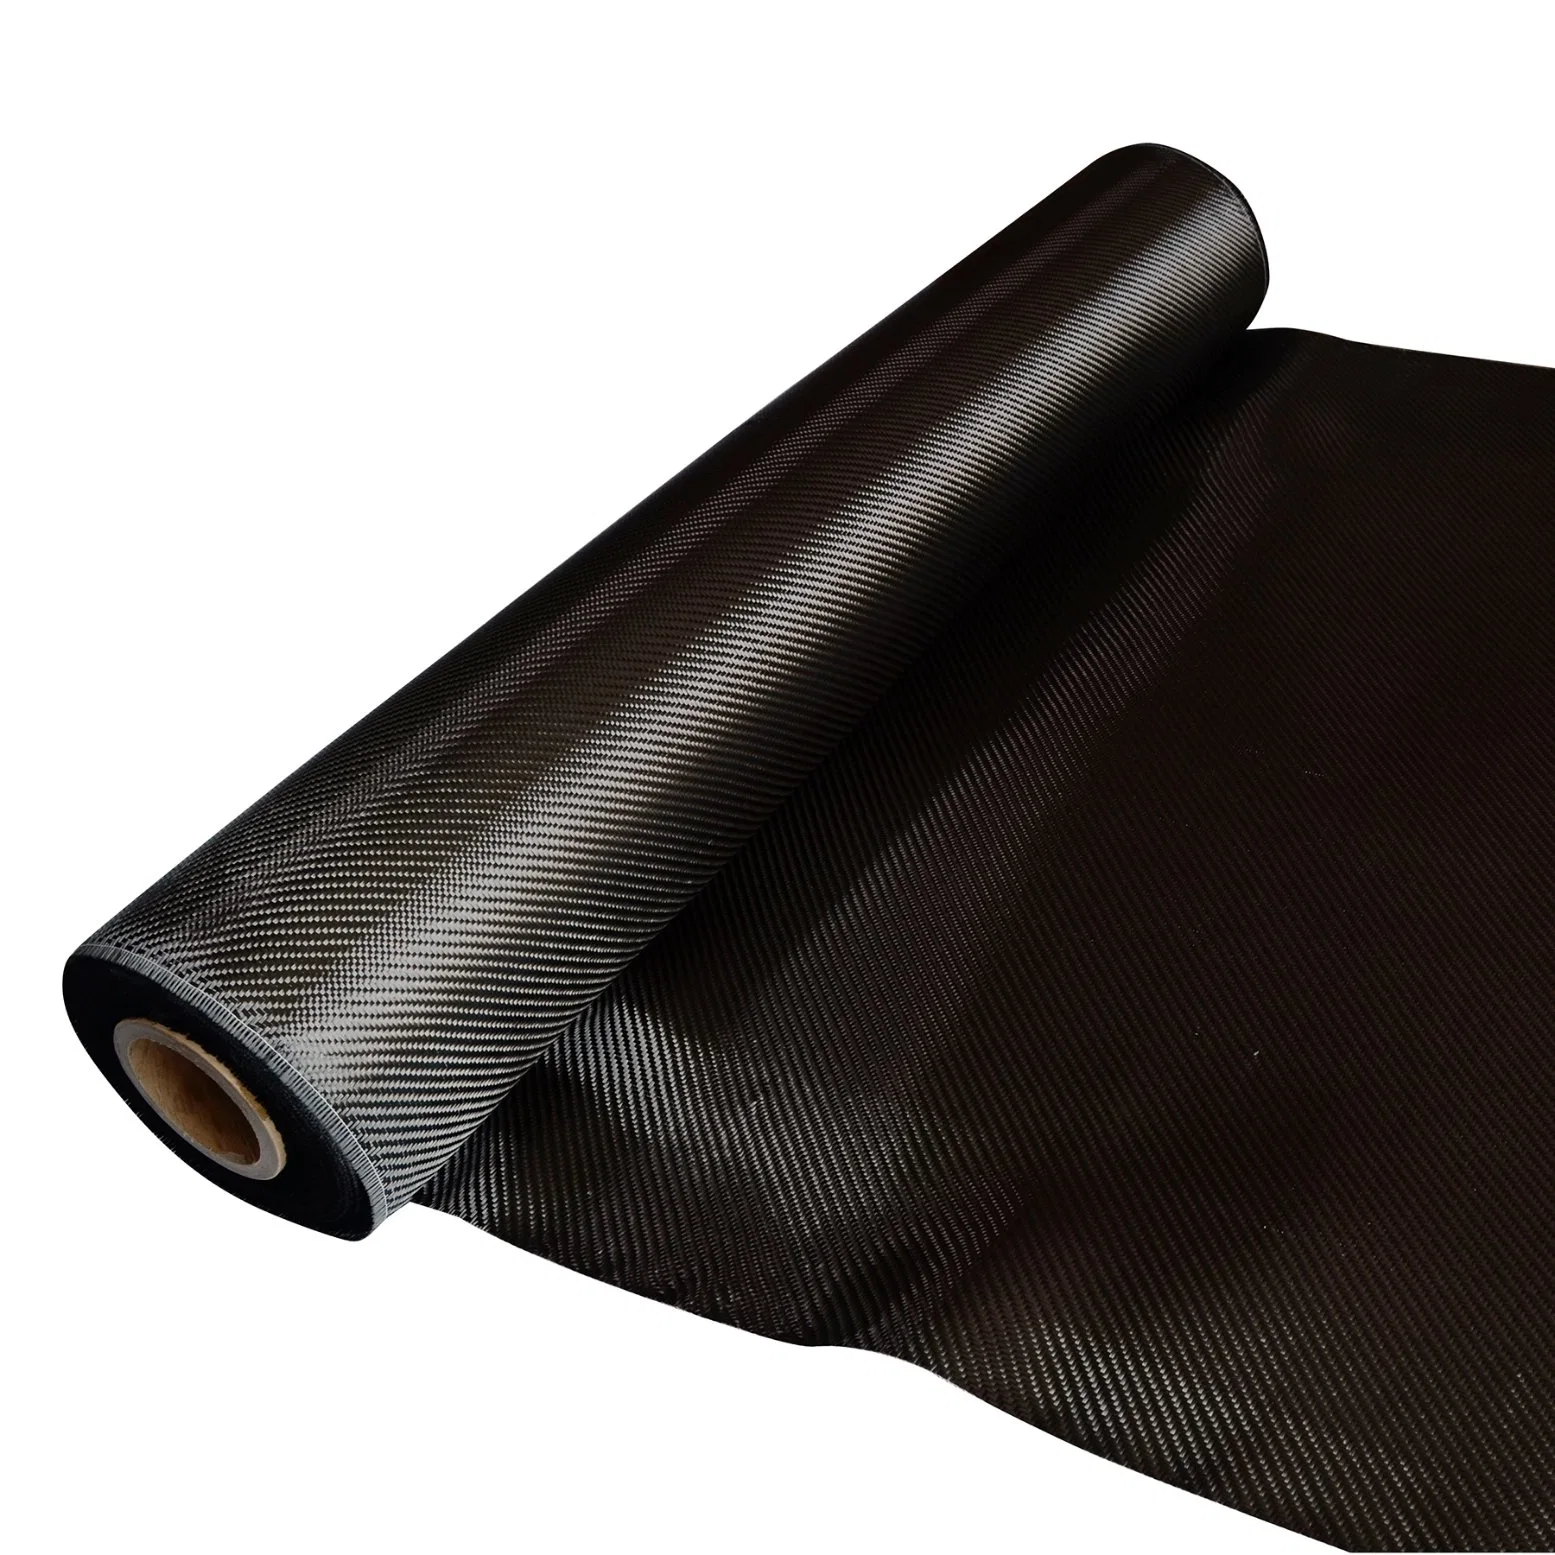 3K Carbon Fiber Fabric 200GSM with Chinese Carbon Fiber T300 Yarn Carbon Fiber Cloth Plain Twill